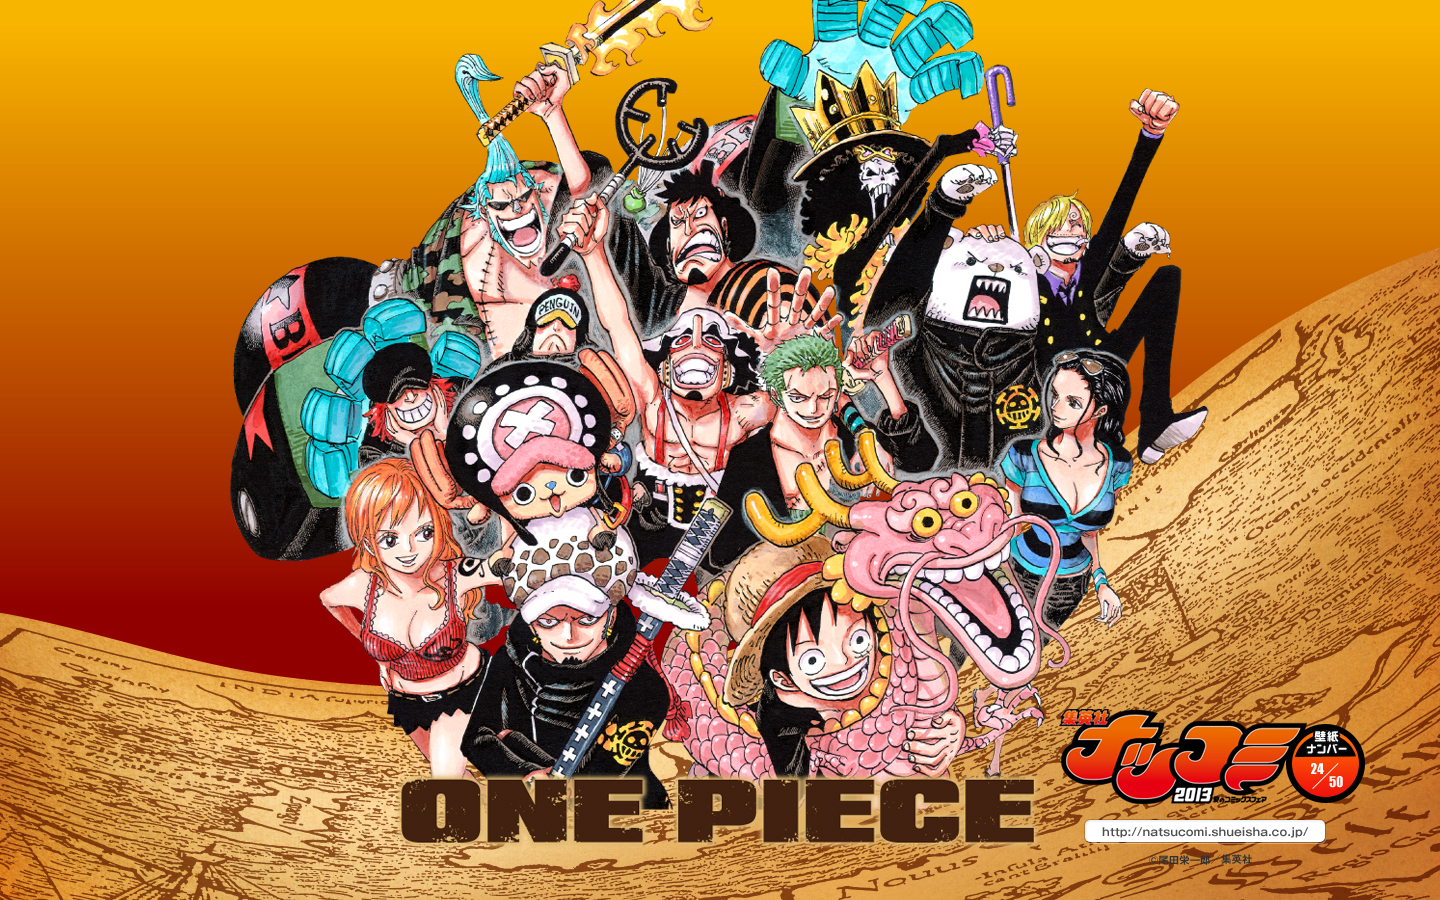 One Piece 高画質な画像の壁紙まとめ ワンピース 壁紙 Pc